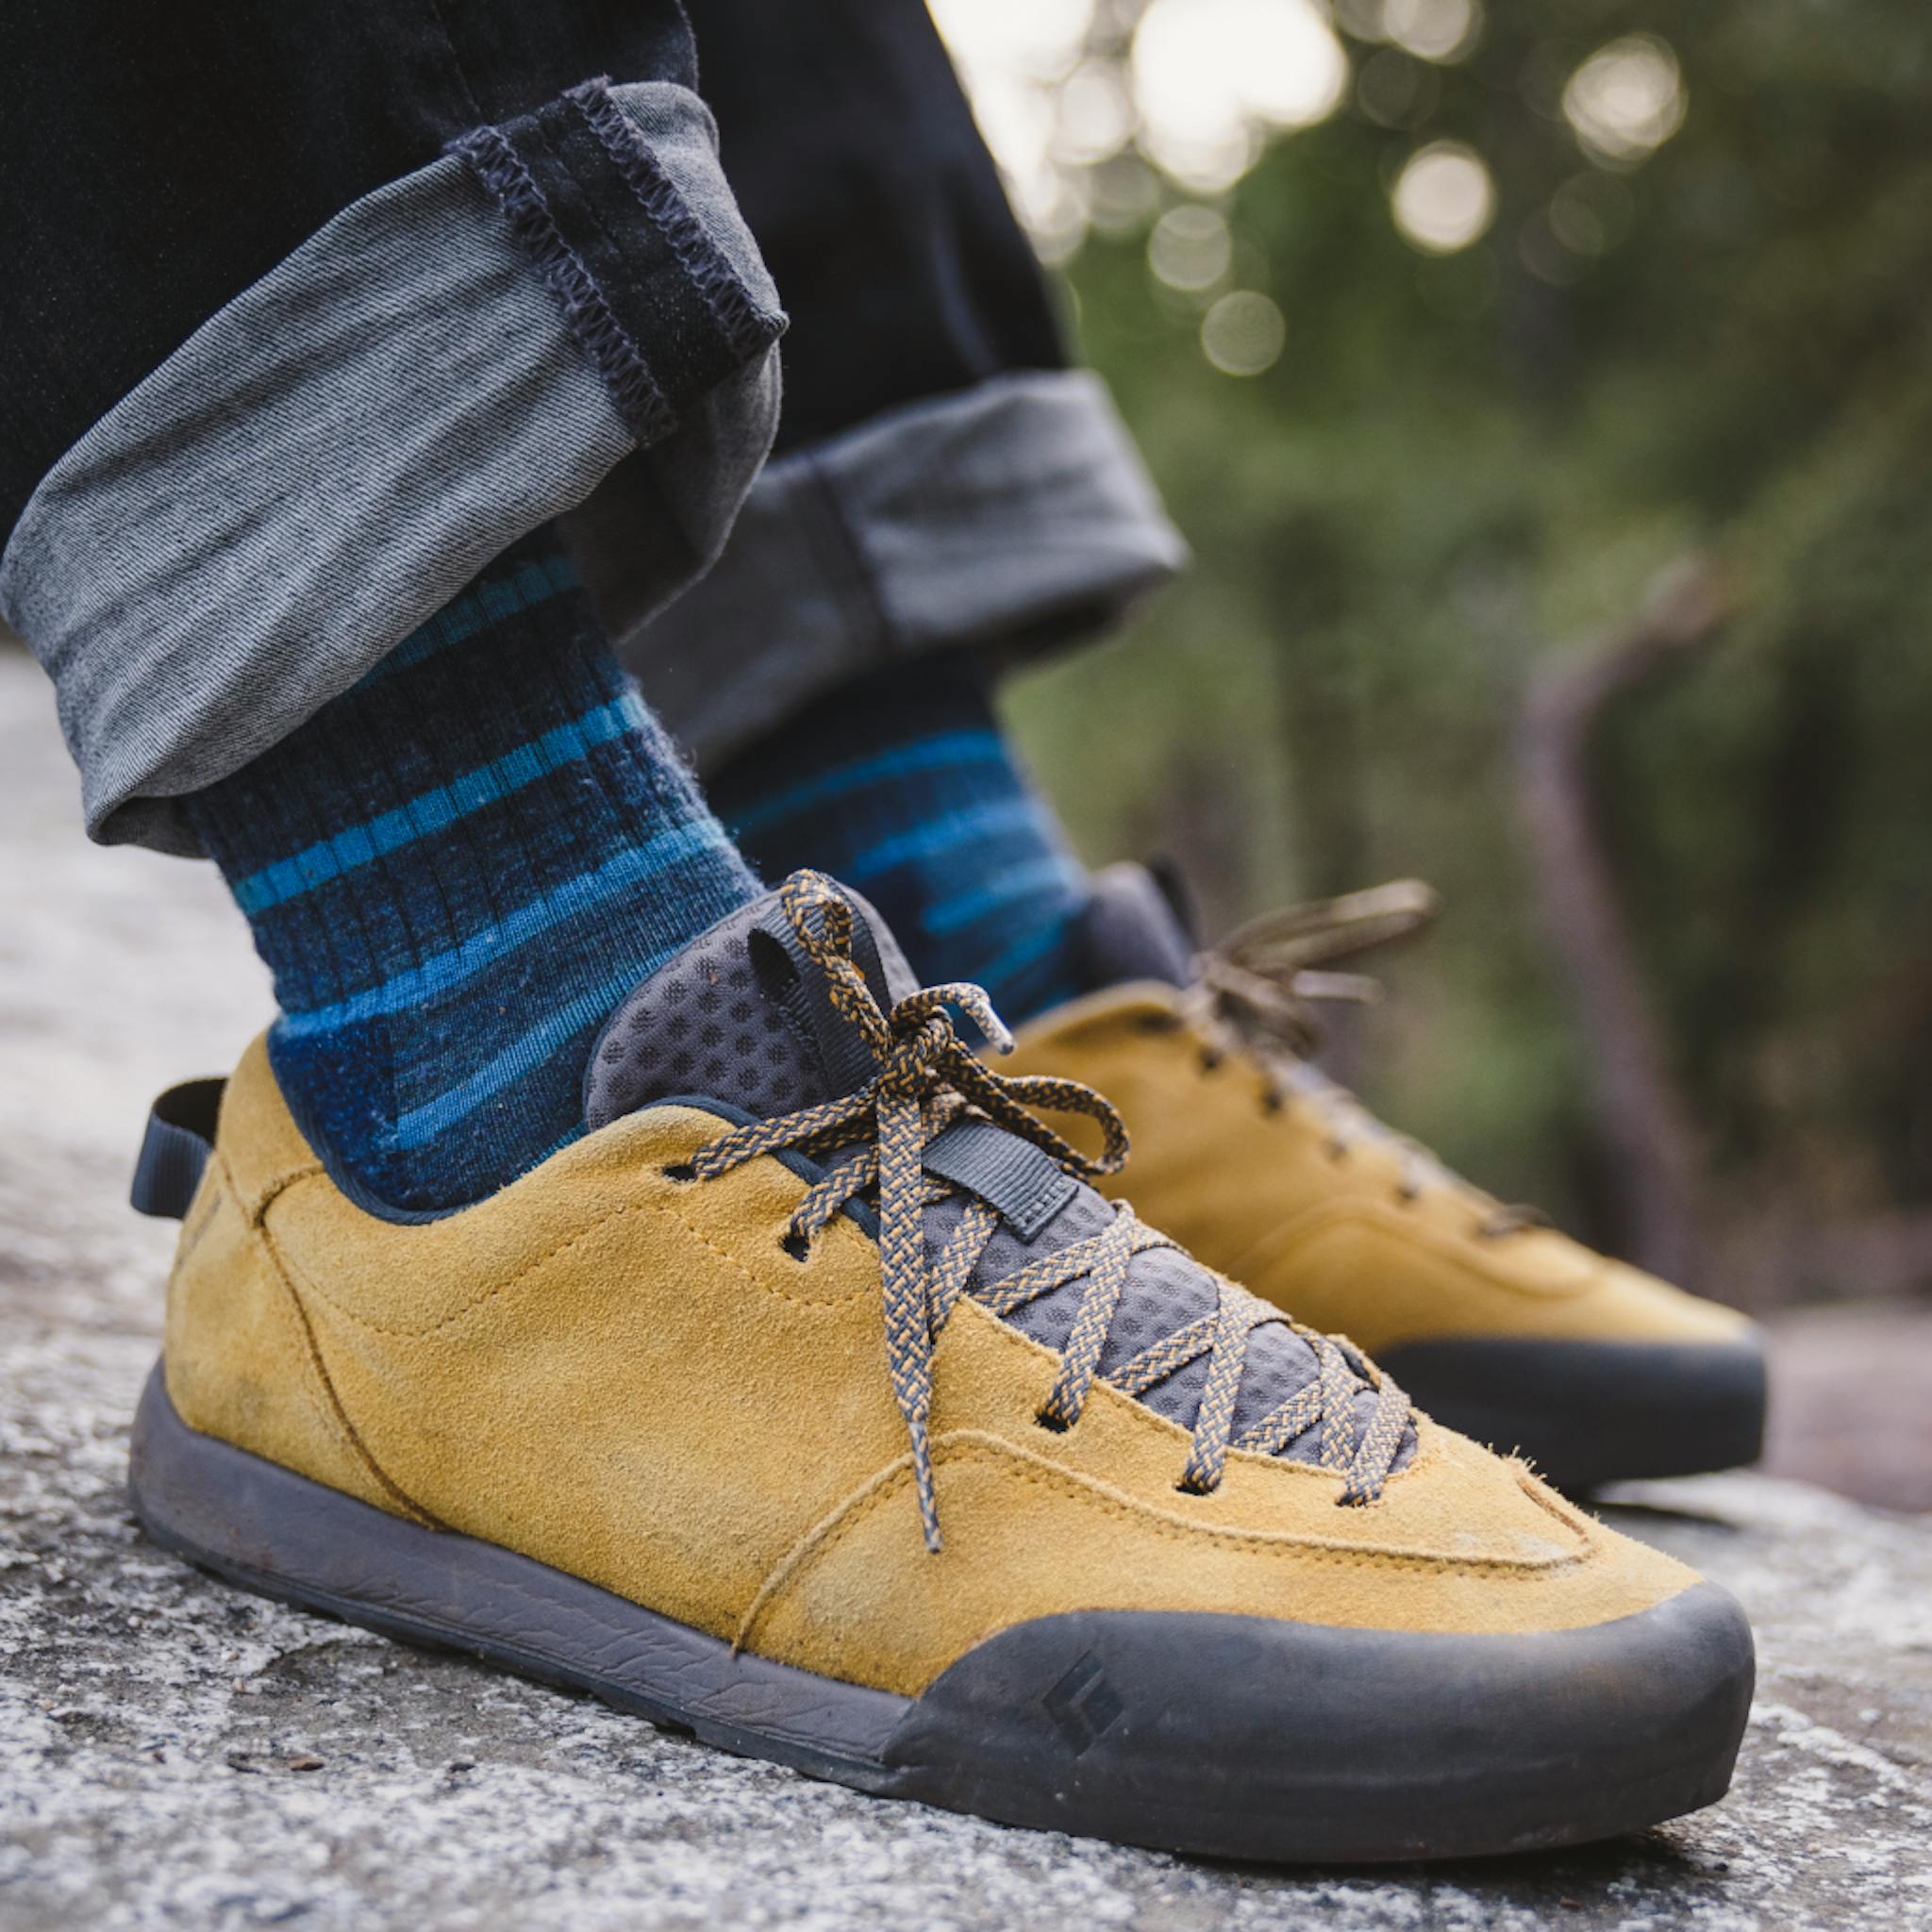 Front detail shot of Men's Prime Shoes in colorway Amber/Carbon on a boulder